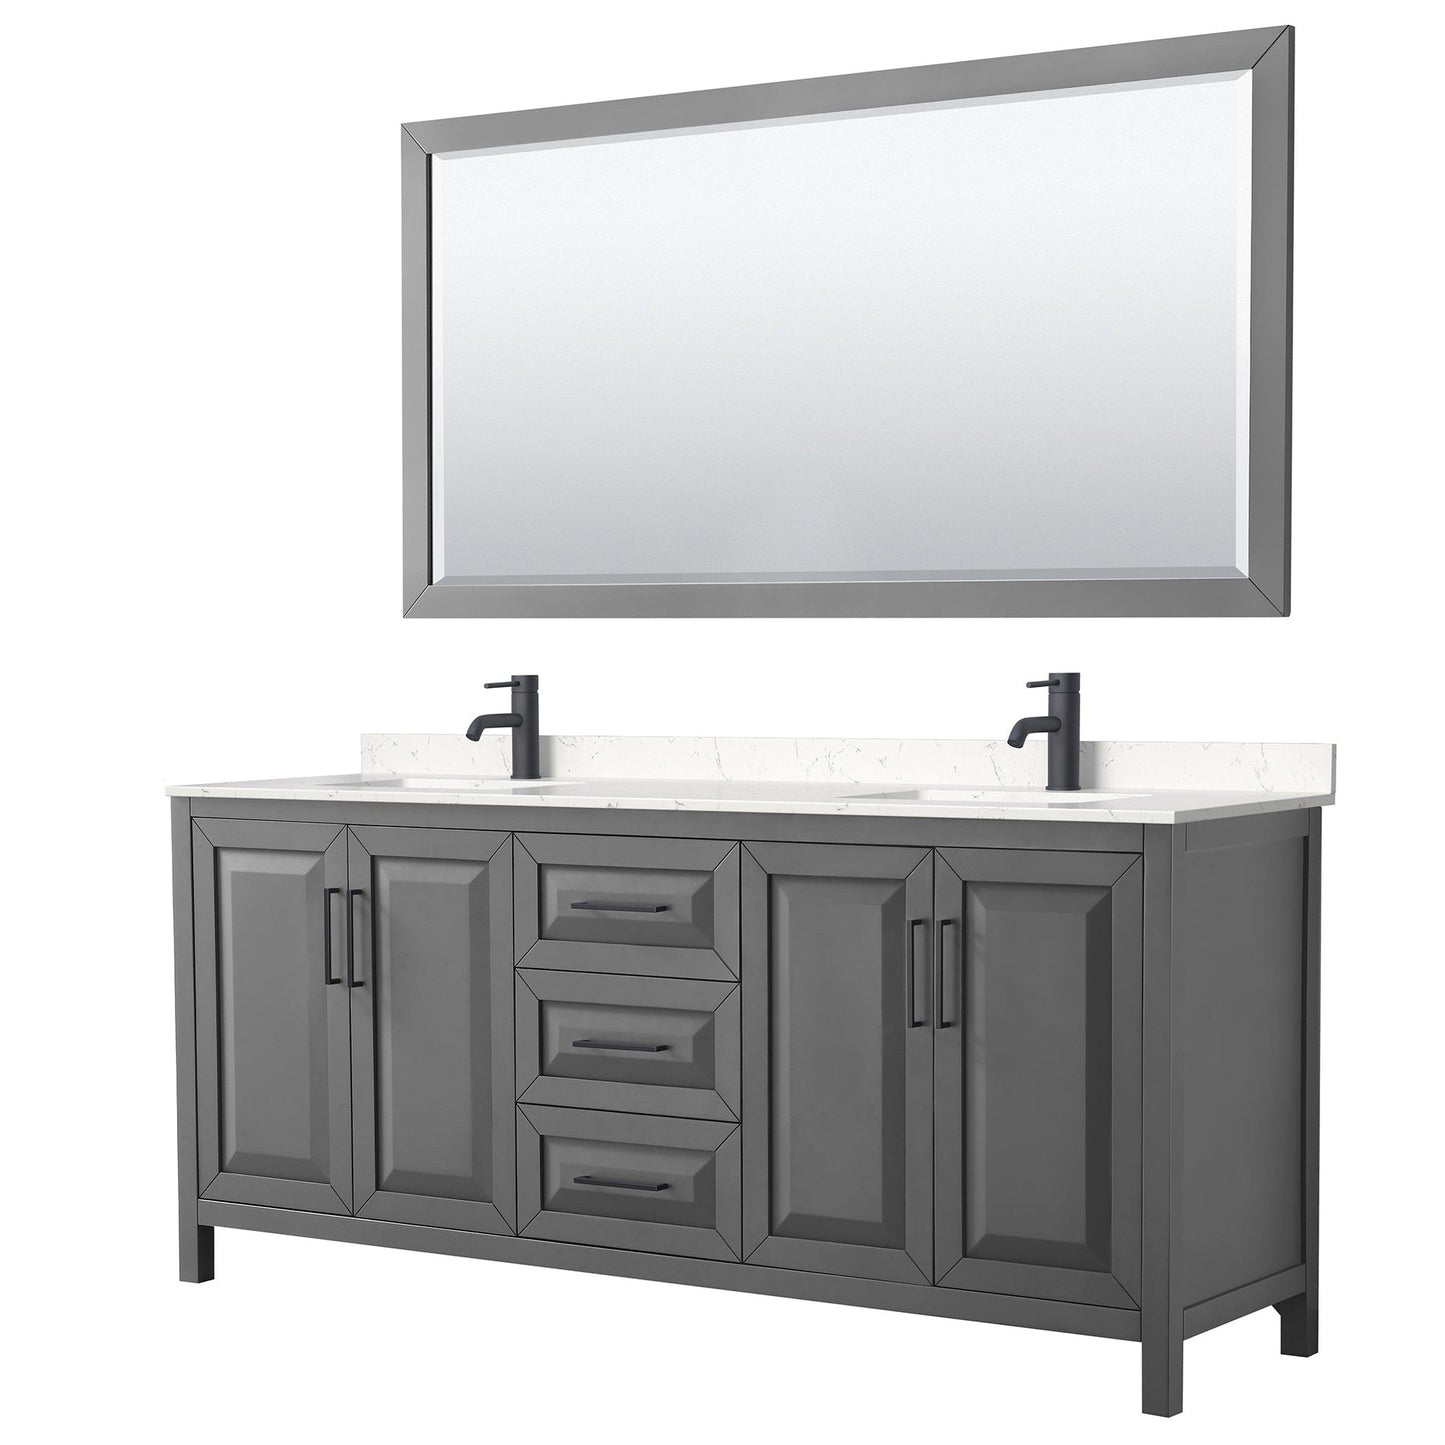 Daria 80" Double Bathroom Vanity in Dark Gray, Carrara Cultured Marble Countertop, Undermount Square Sinks, Matte Black Trim, 70" Mirror